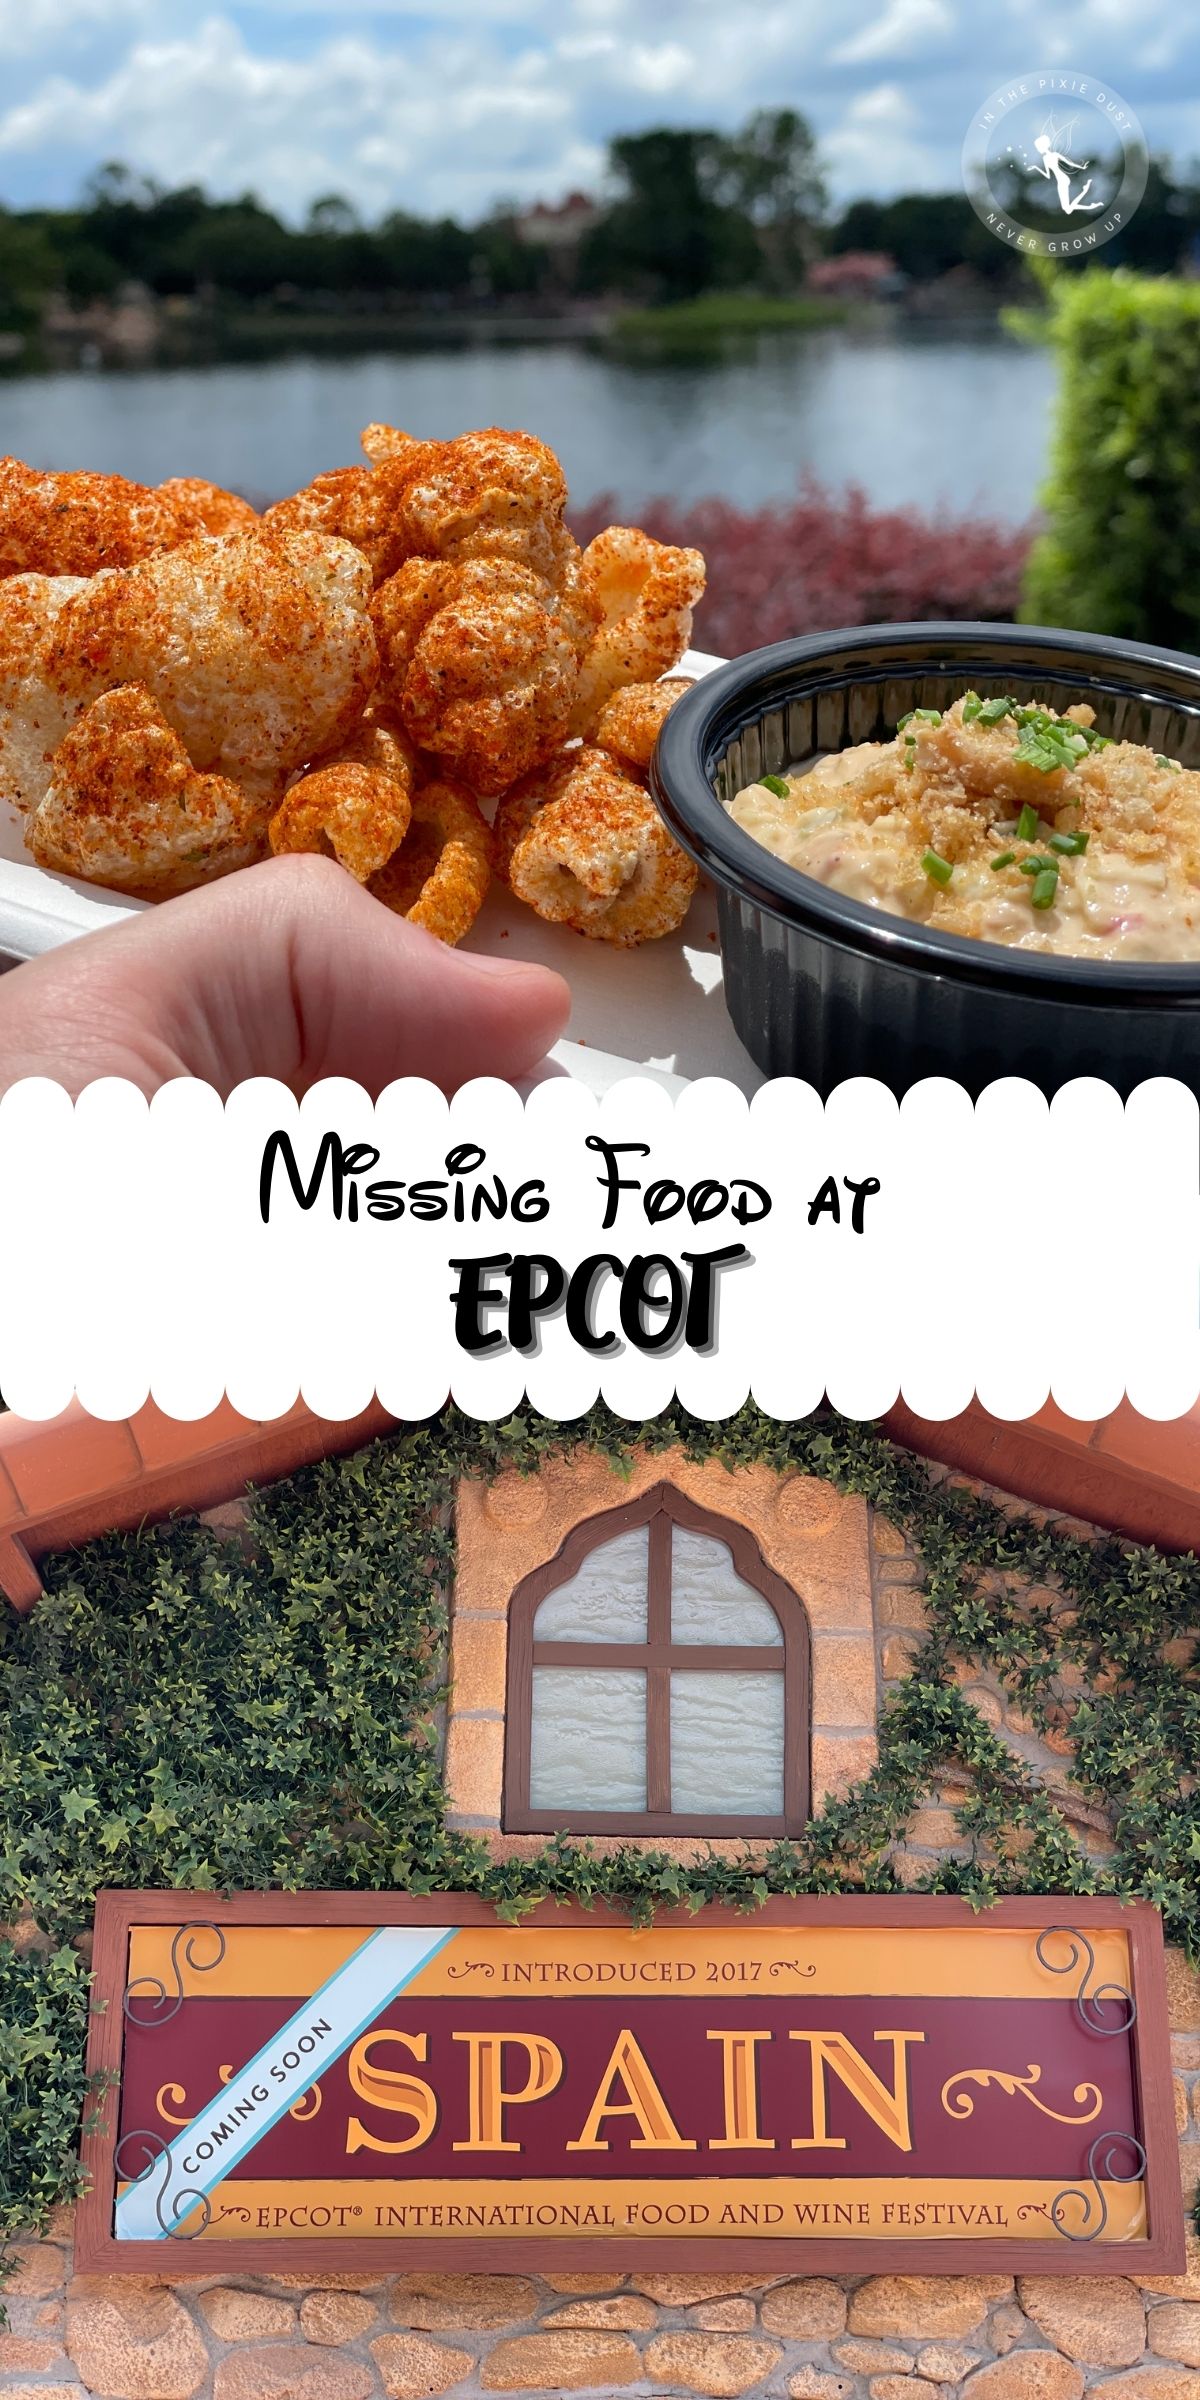 Missing Food at EPCOT